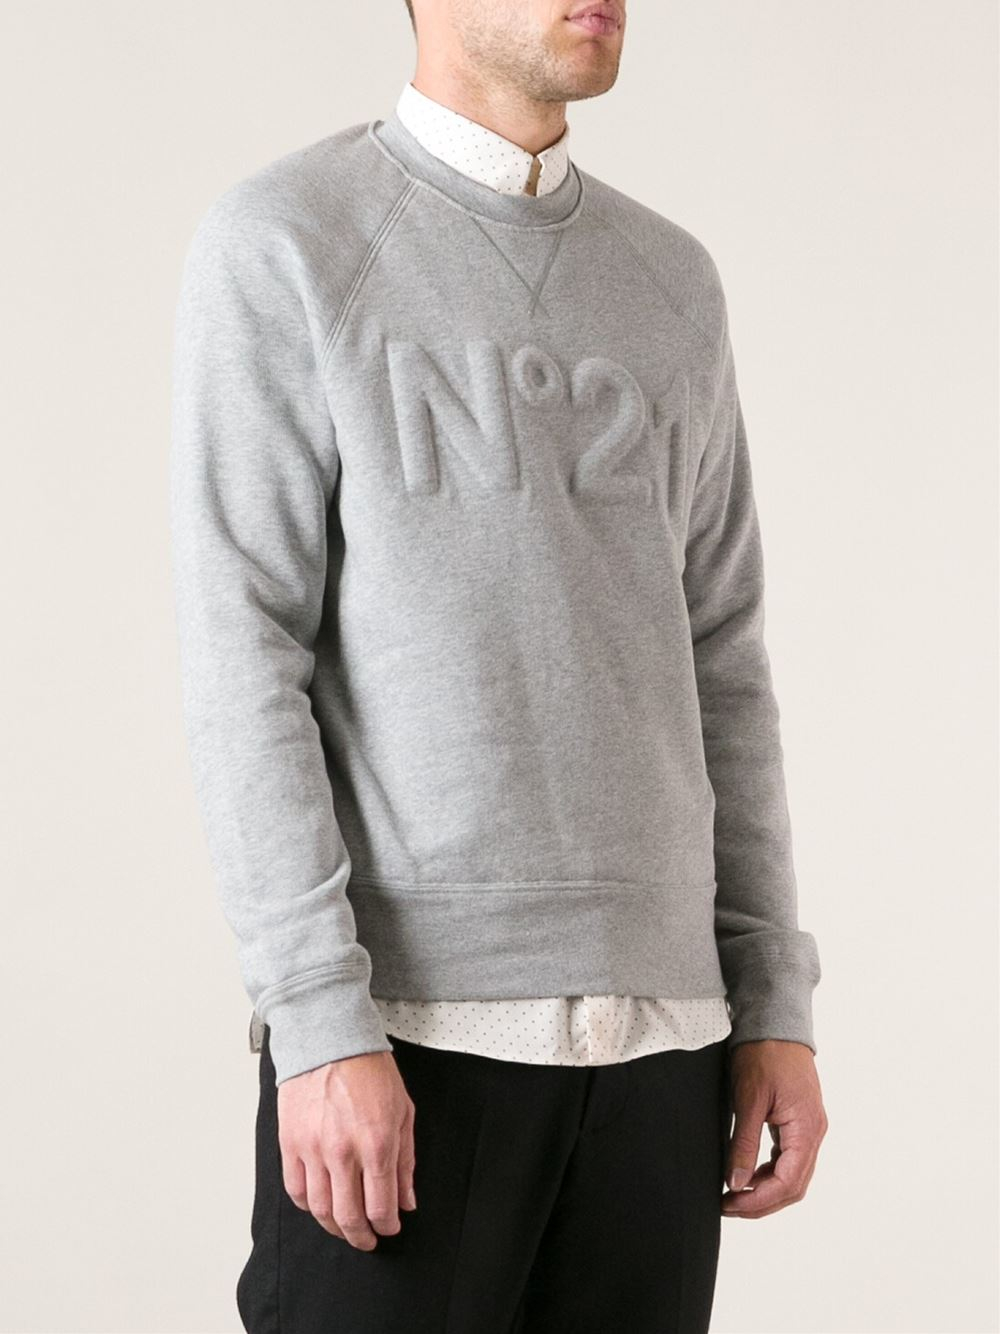 N°21 Logo Embossed Sweater in Grey (Gray) for Men - Lyst